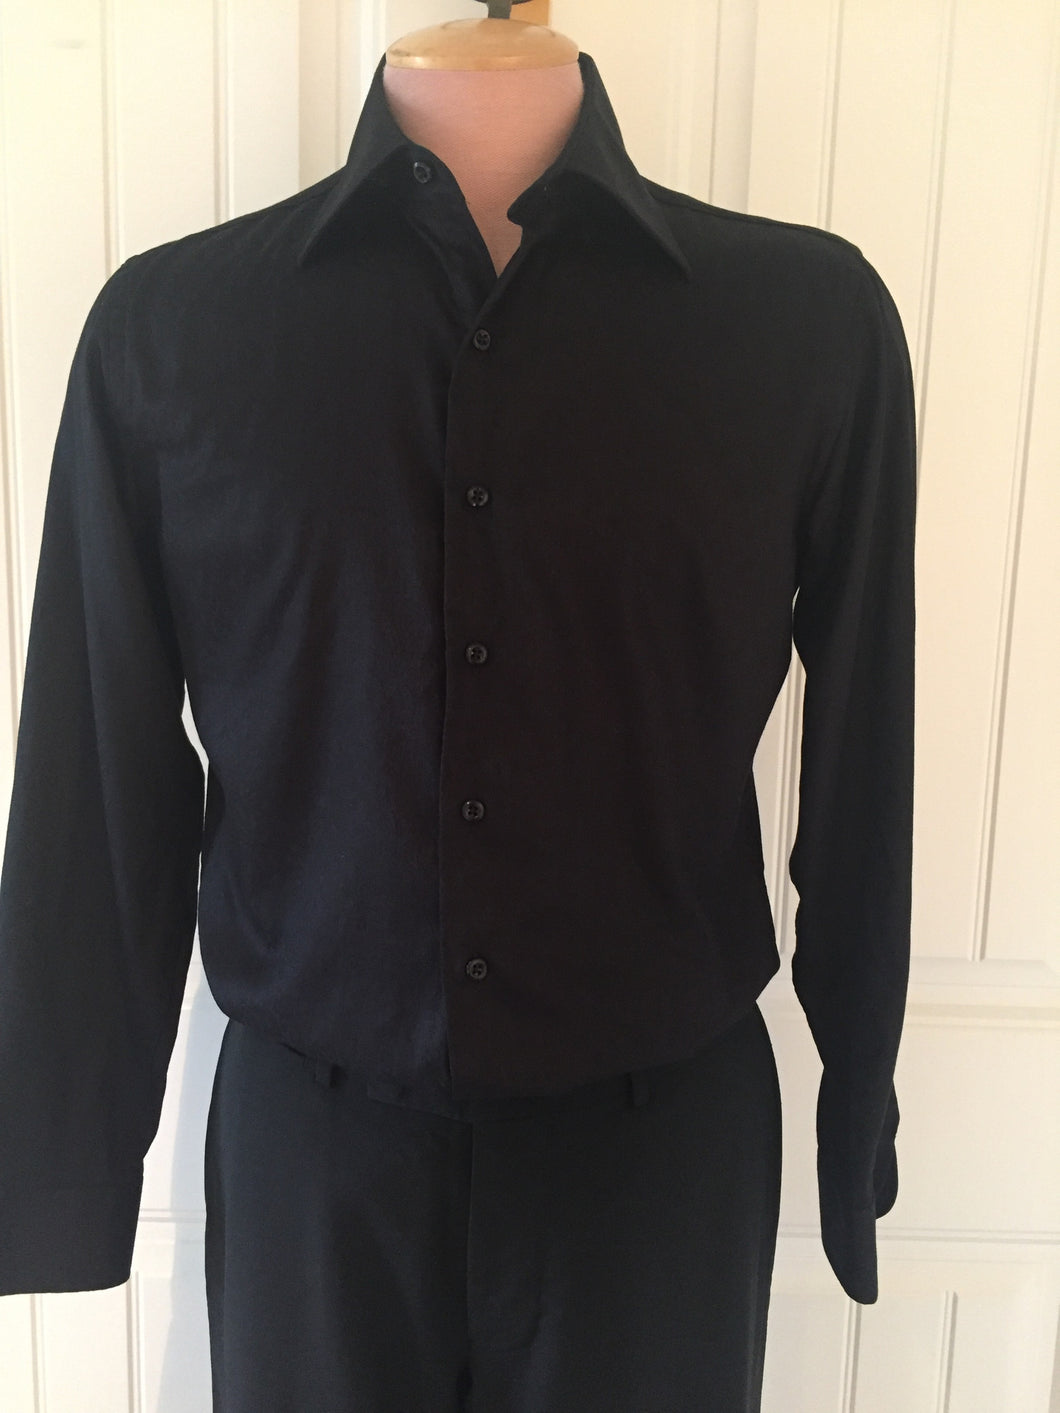 black paisley dress shirt